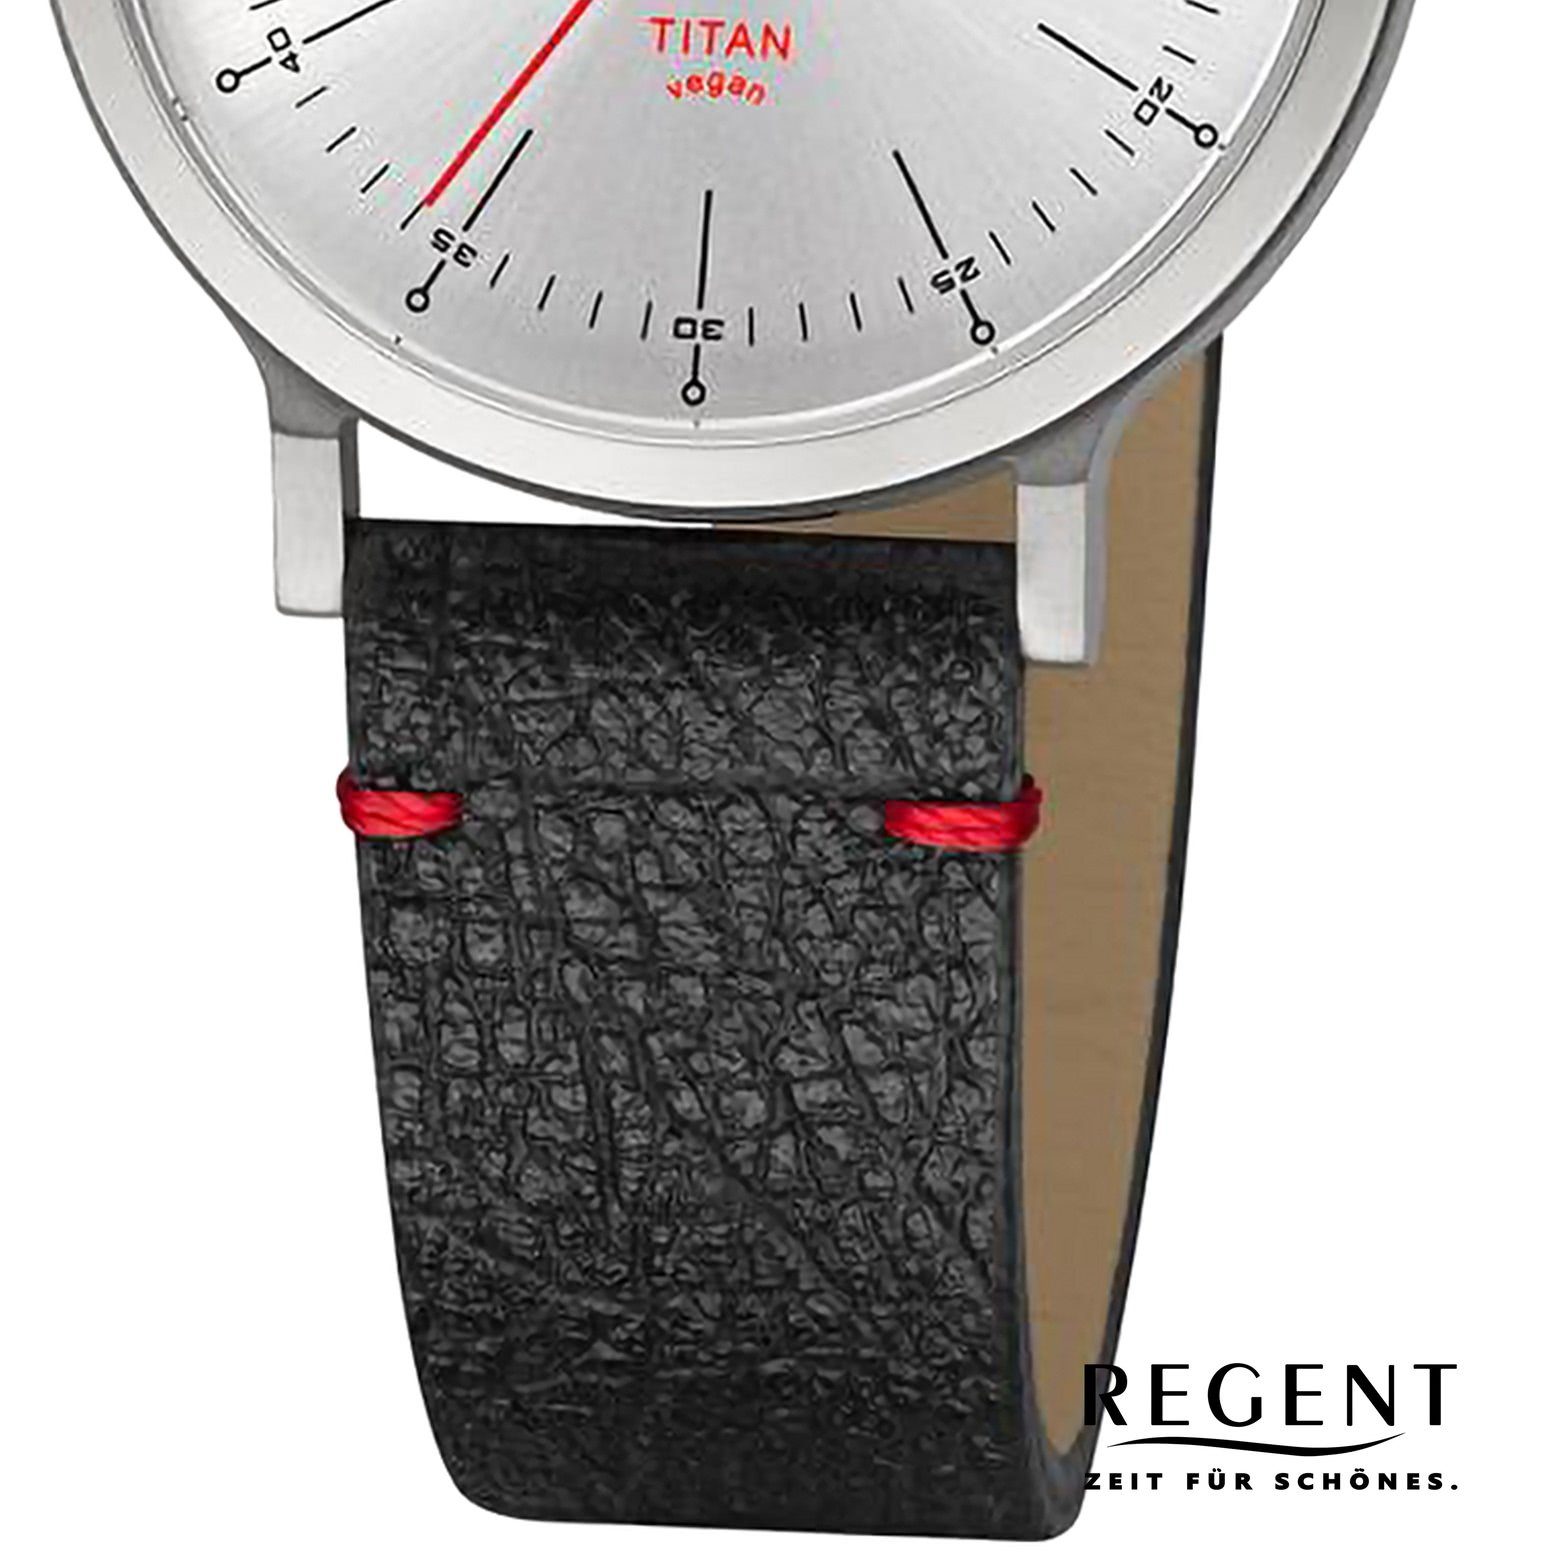 Regent Quarzuhr Regent Lederarmband rund, Armbanduhr groß 33mm), extra Analog, (ca. Armbanduhr Damen Damen